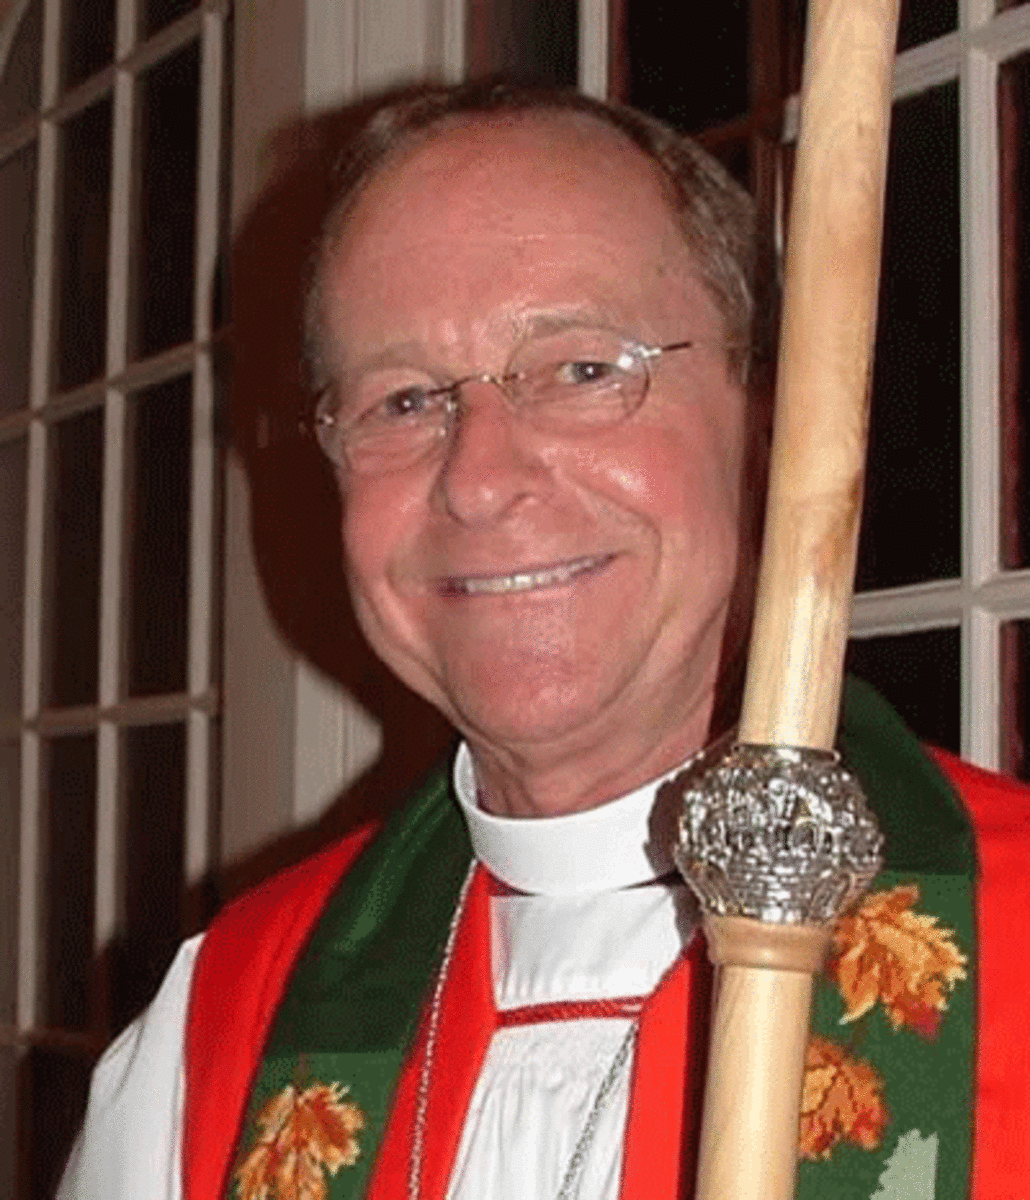 Rev. Gene Robinson